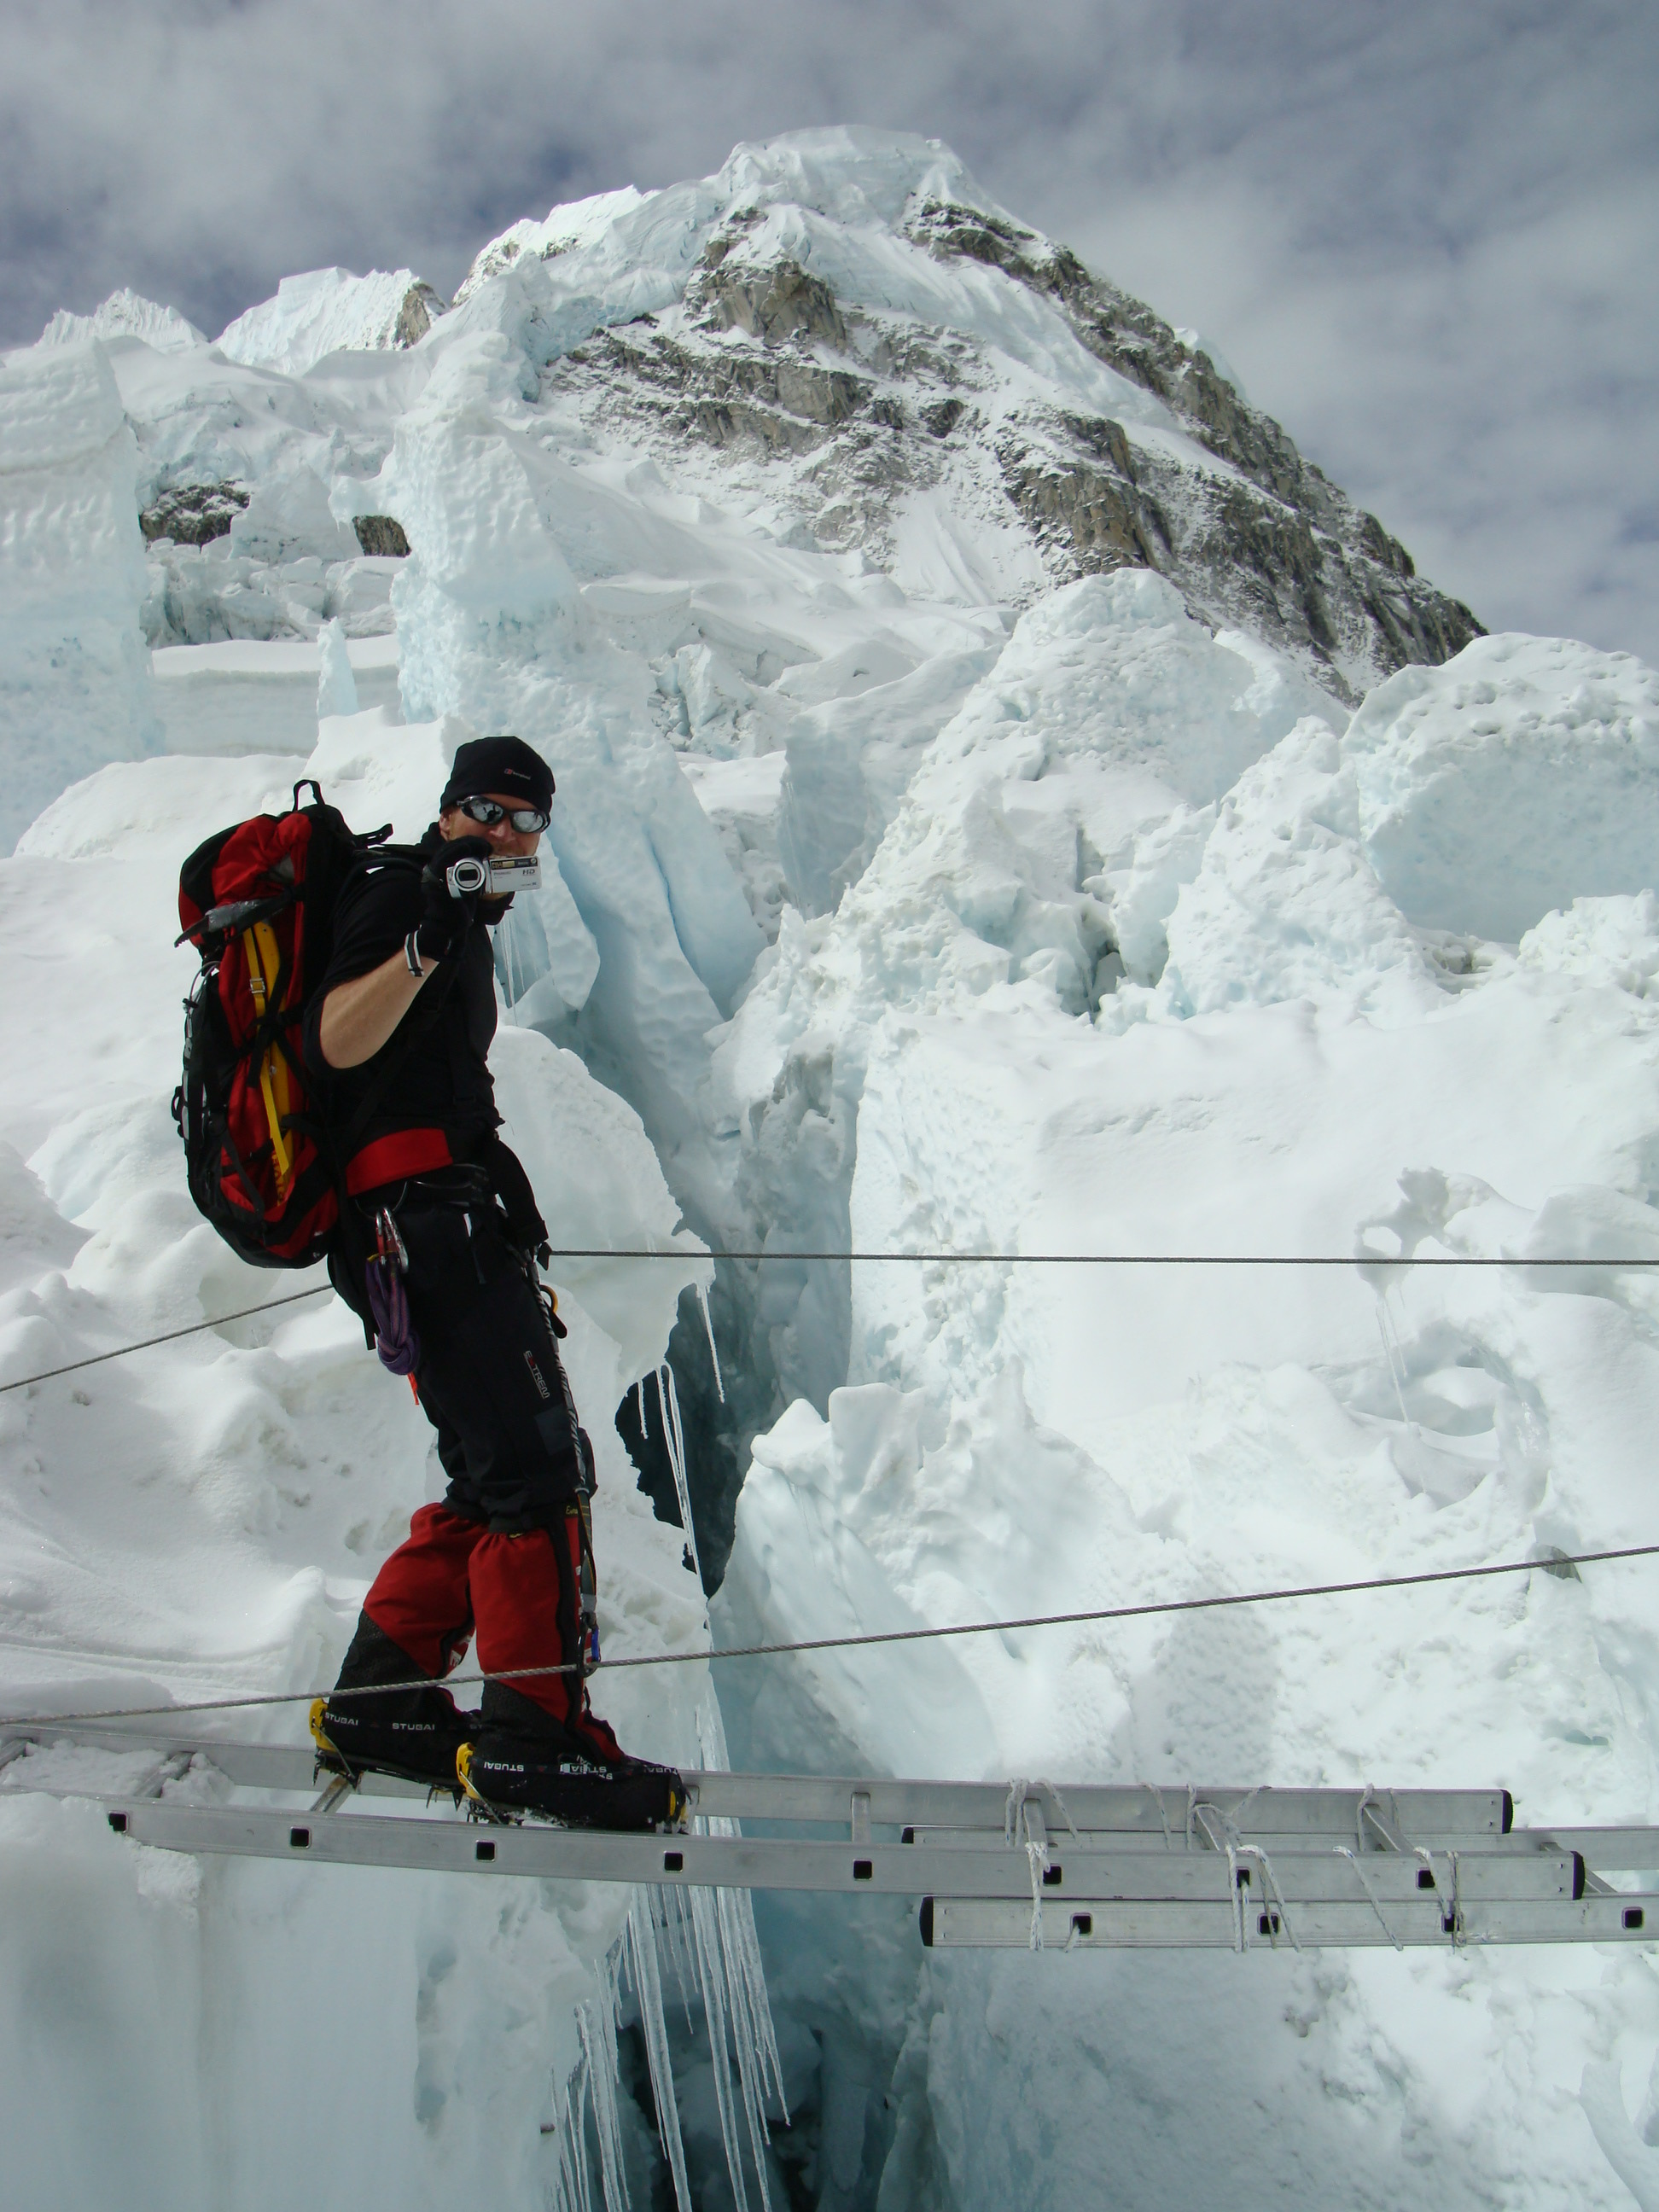 Filming on Mount Everest